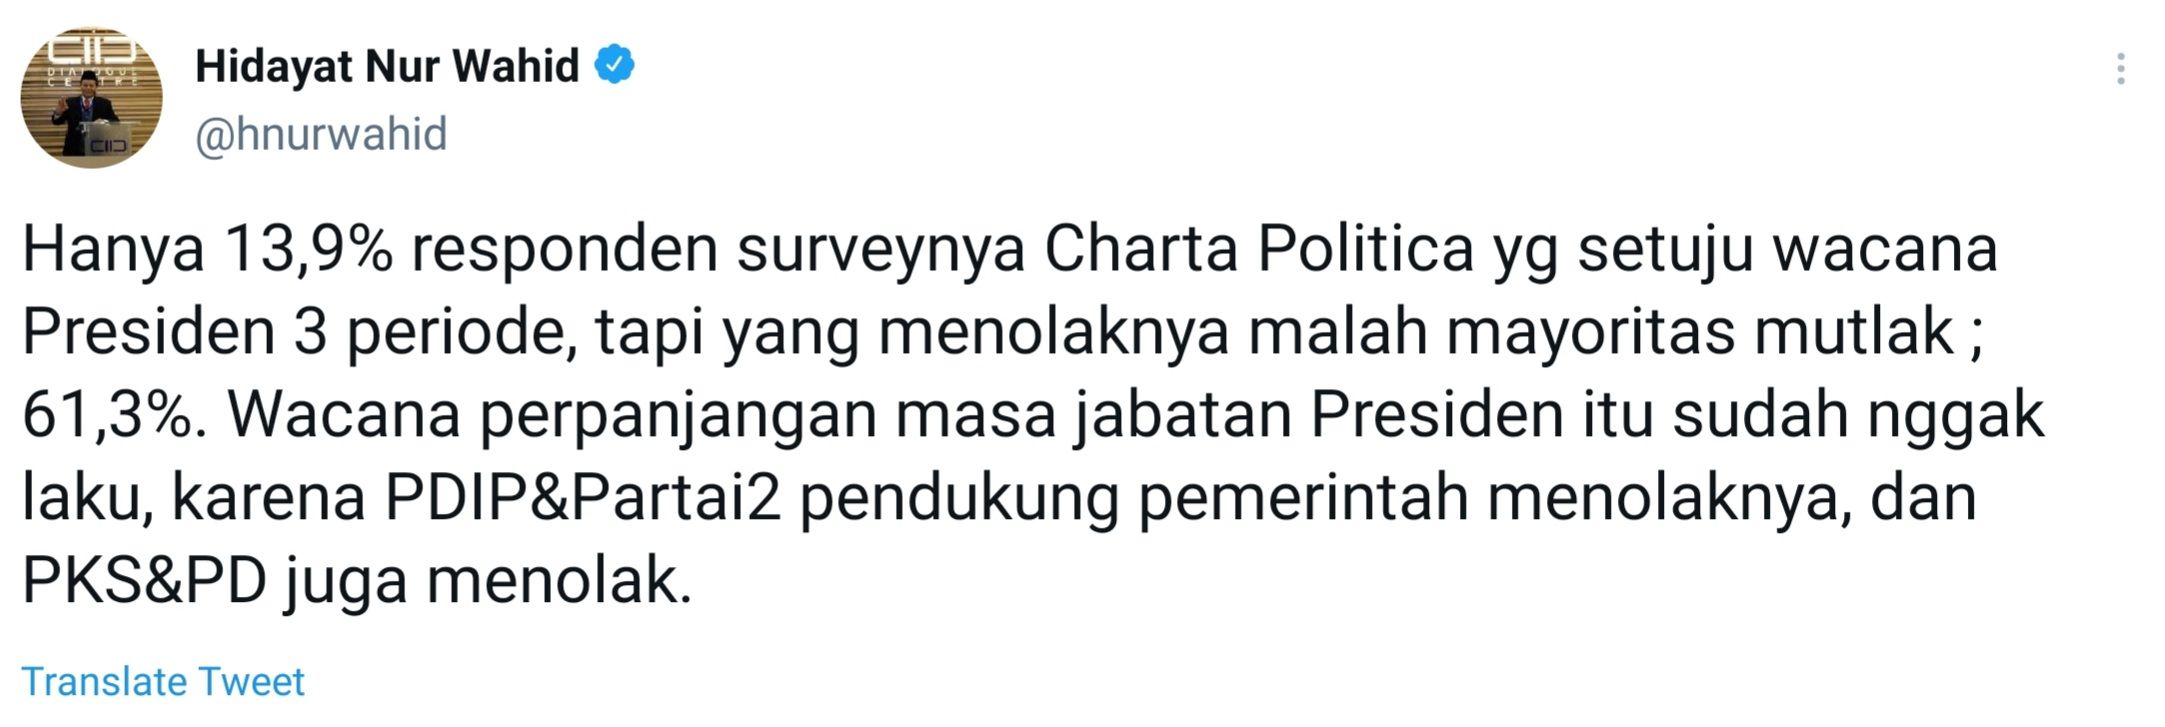 Cuitan Hidayat Nur Wahid yang menyebut hasil survei mayoritas mutlak menolak wacana Presiden 3 periode.*